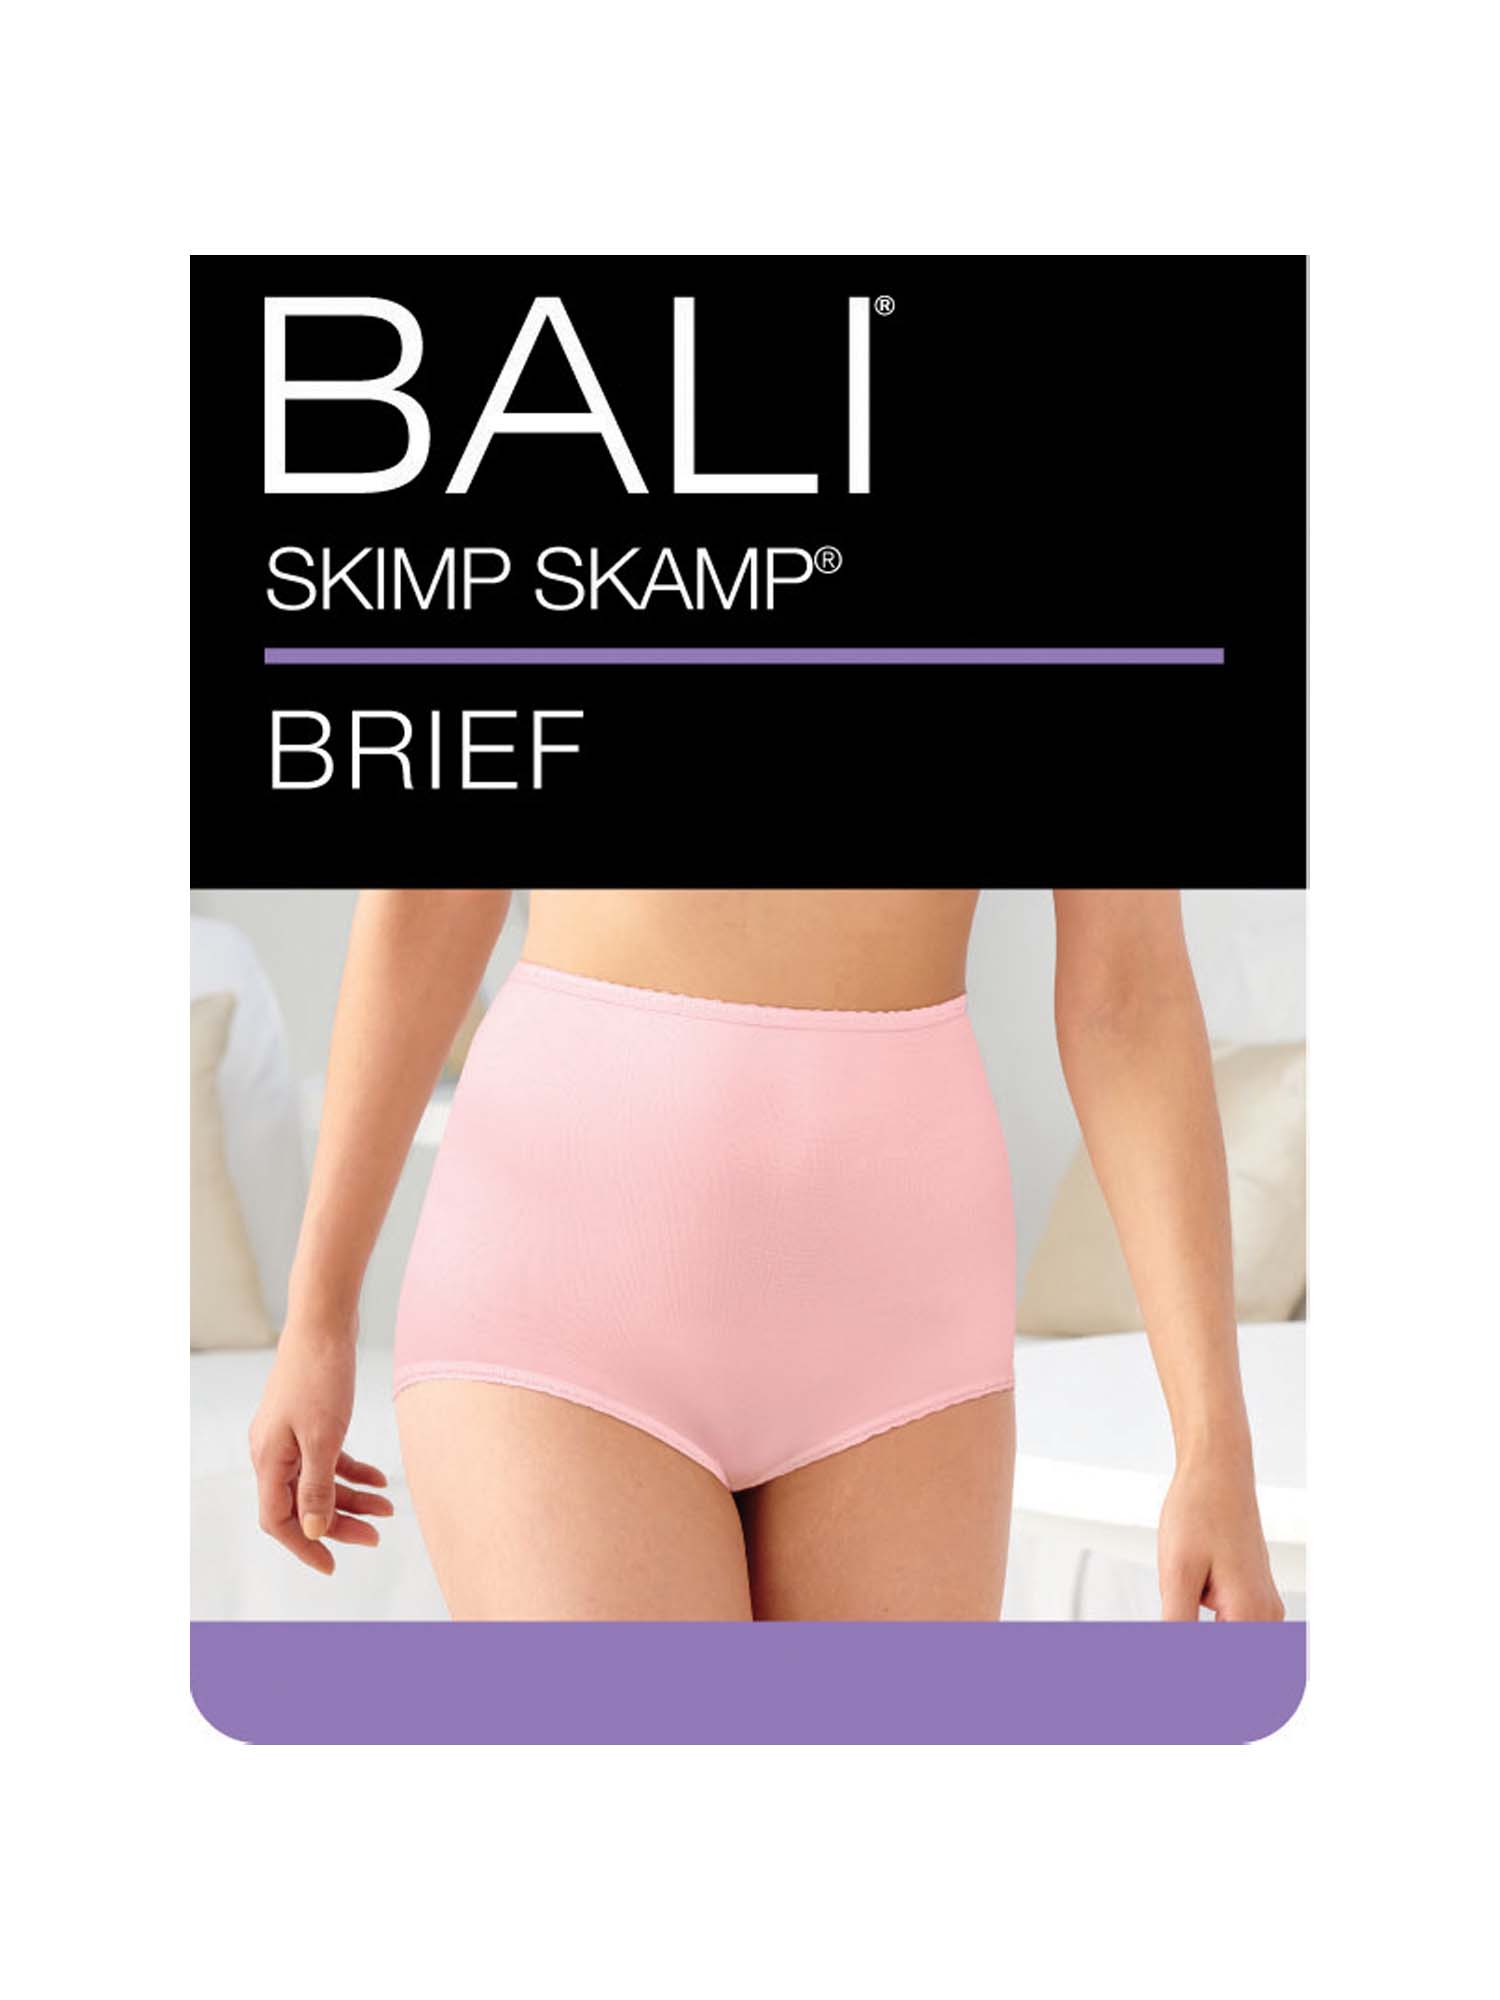 Bali Skimp Skamp Brief Panty Mocha 8 Women's - image 3 of 5